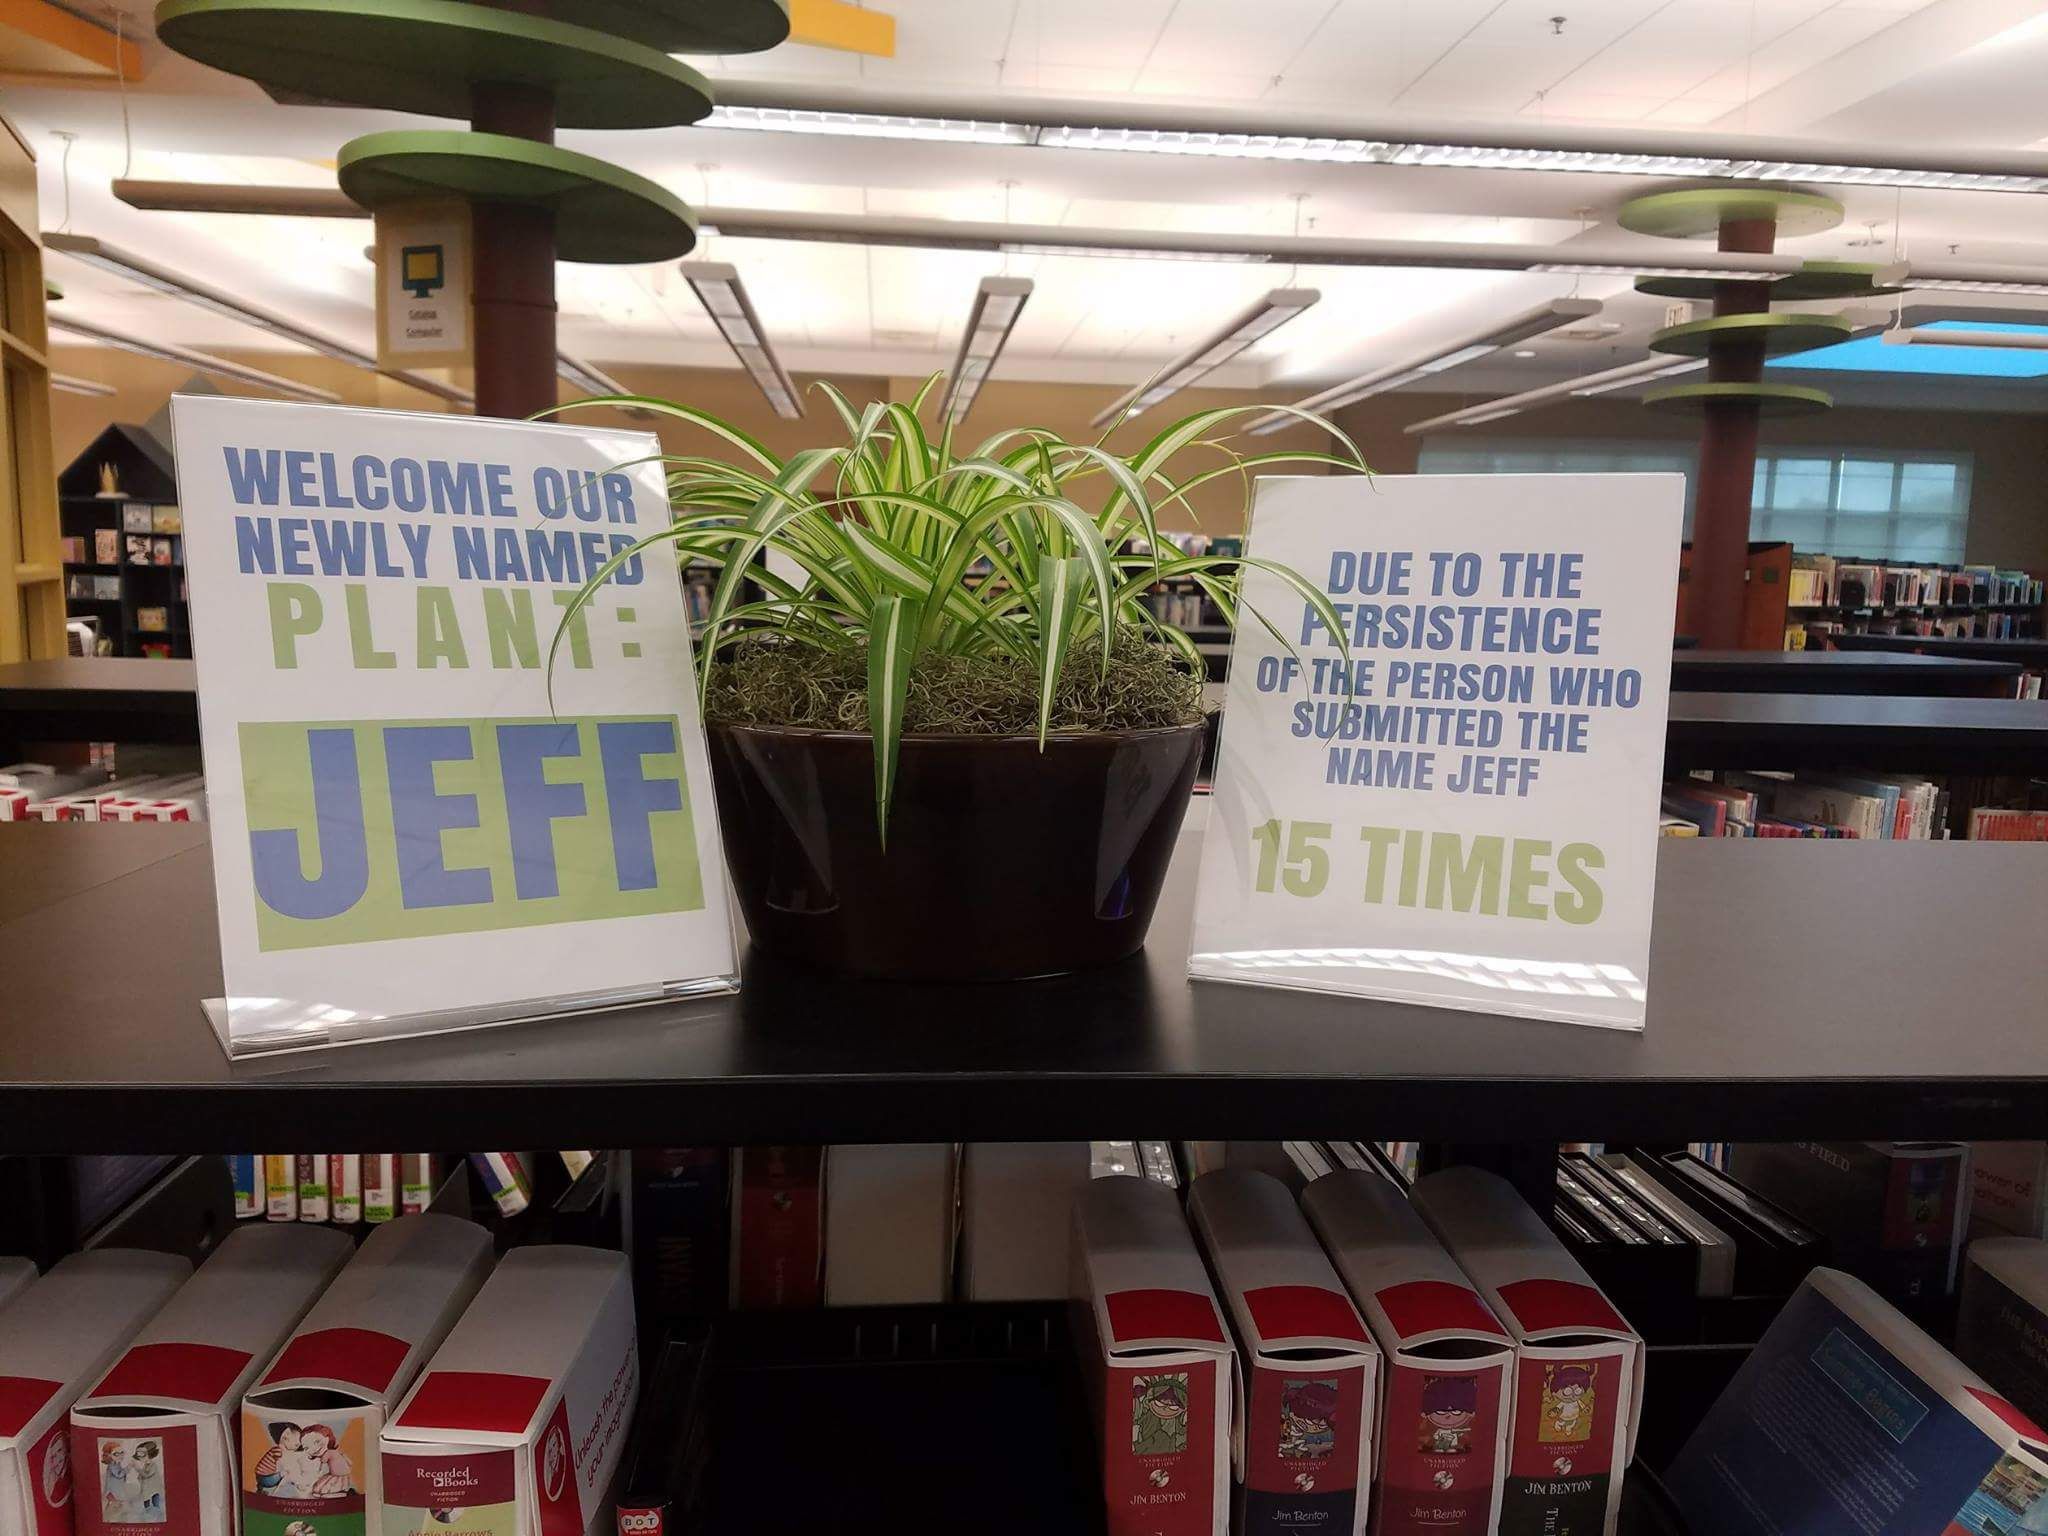 Hi Jeff!